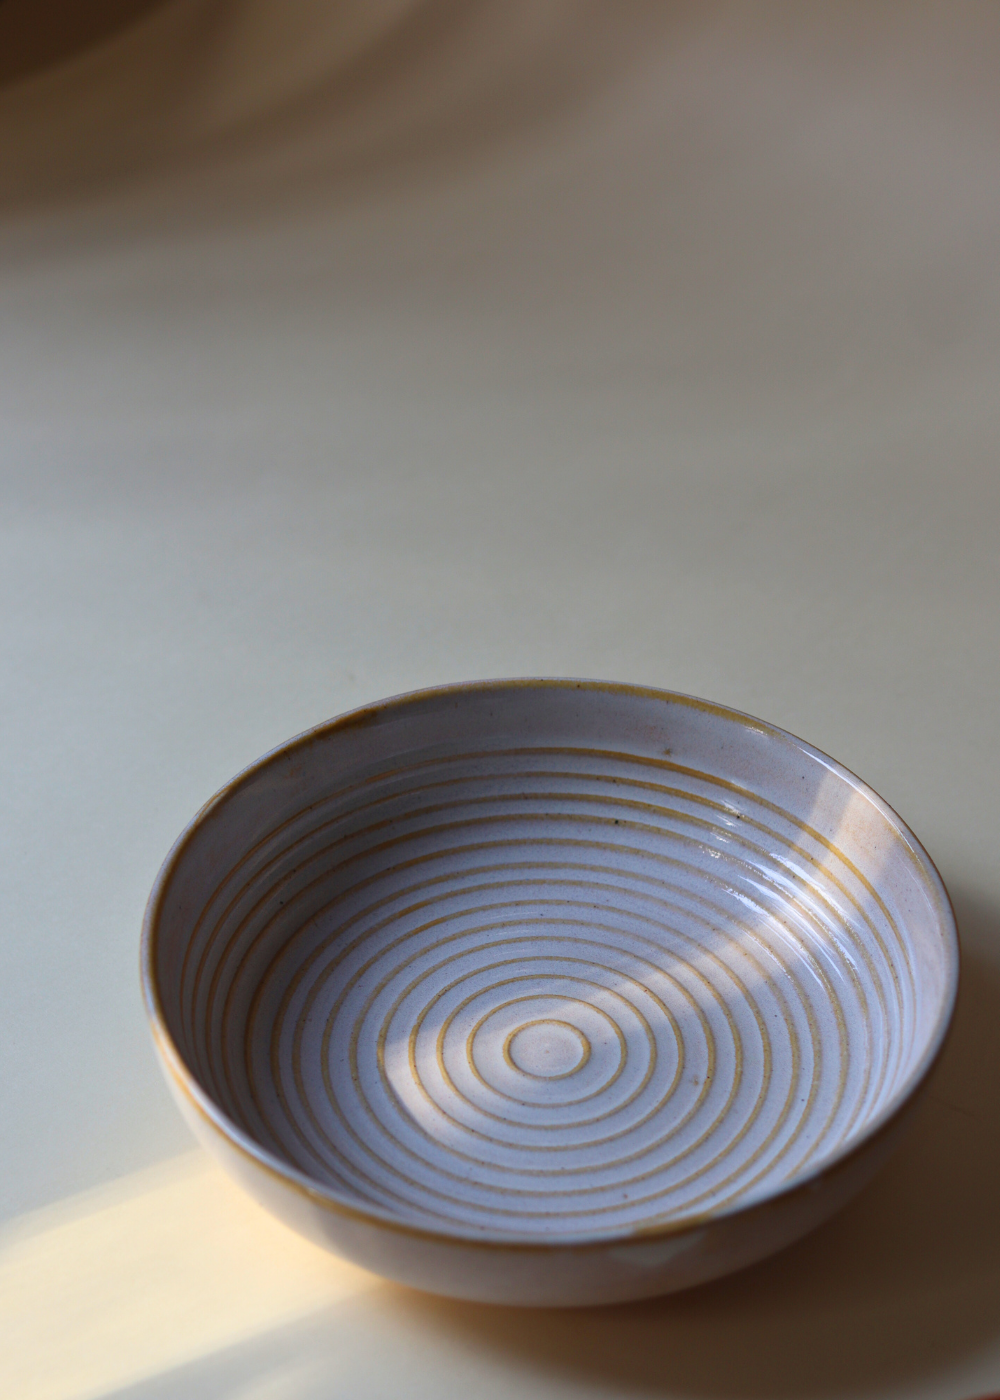 bowl, handdade bowl, ceramic bowl